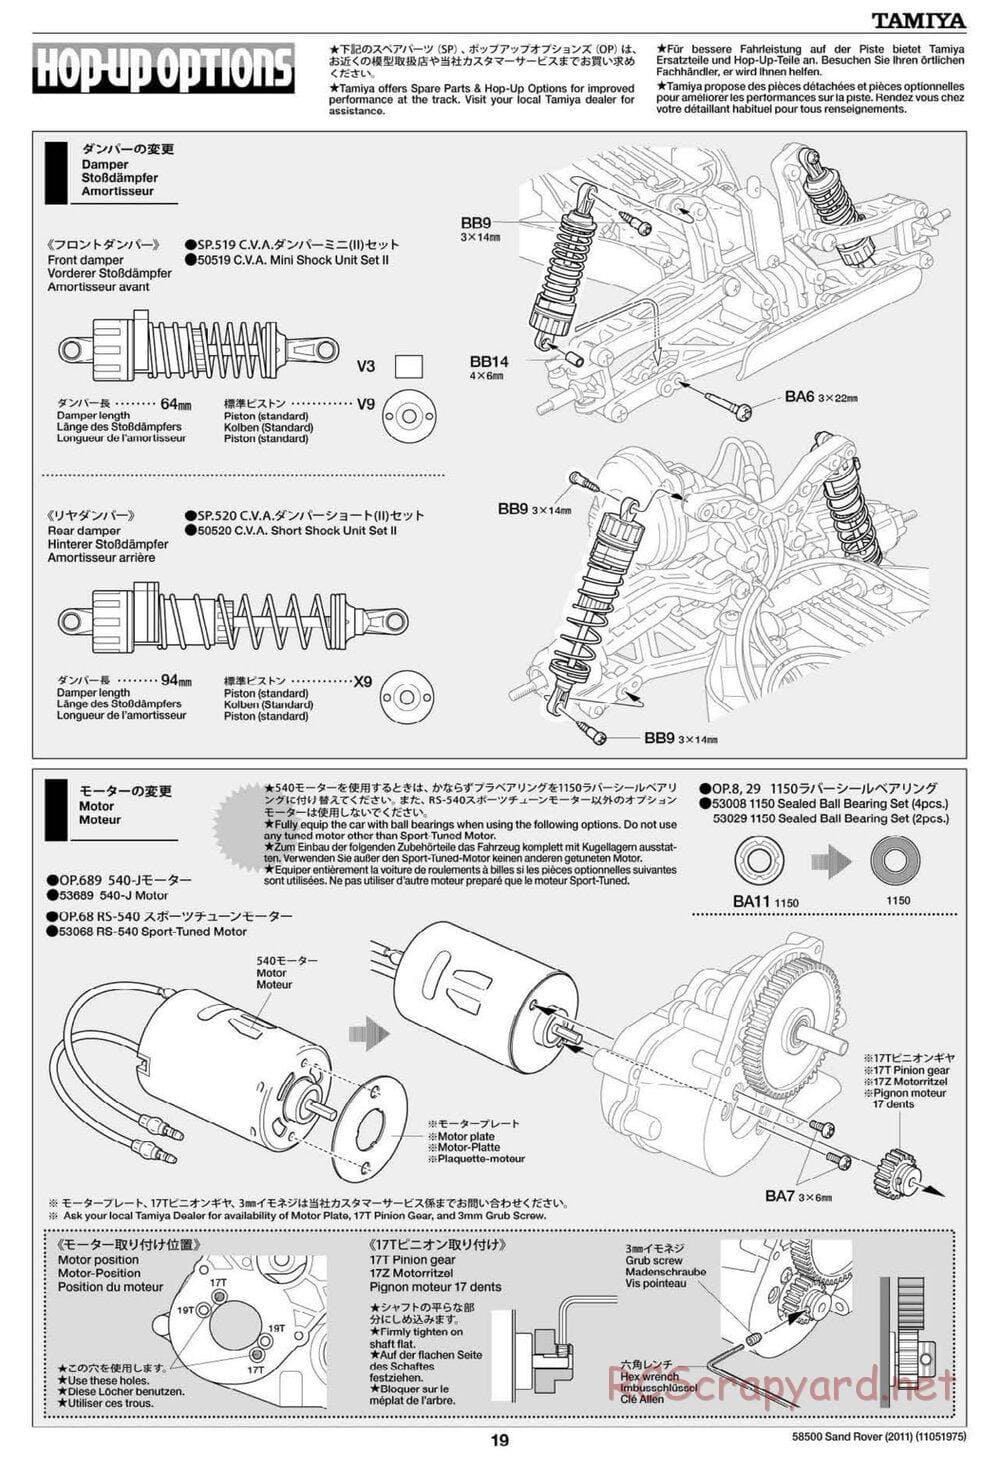 Tamiya - Sand Rover 2011 Chassis - Manual - Page 19